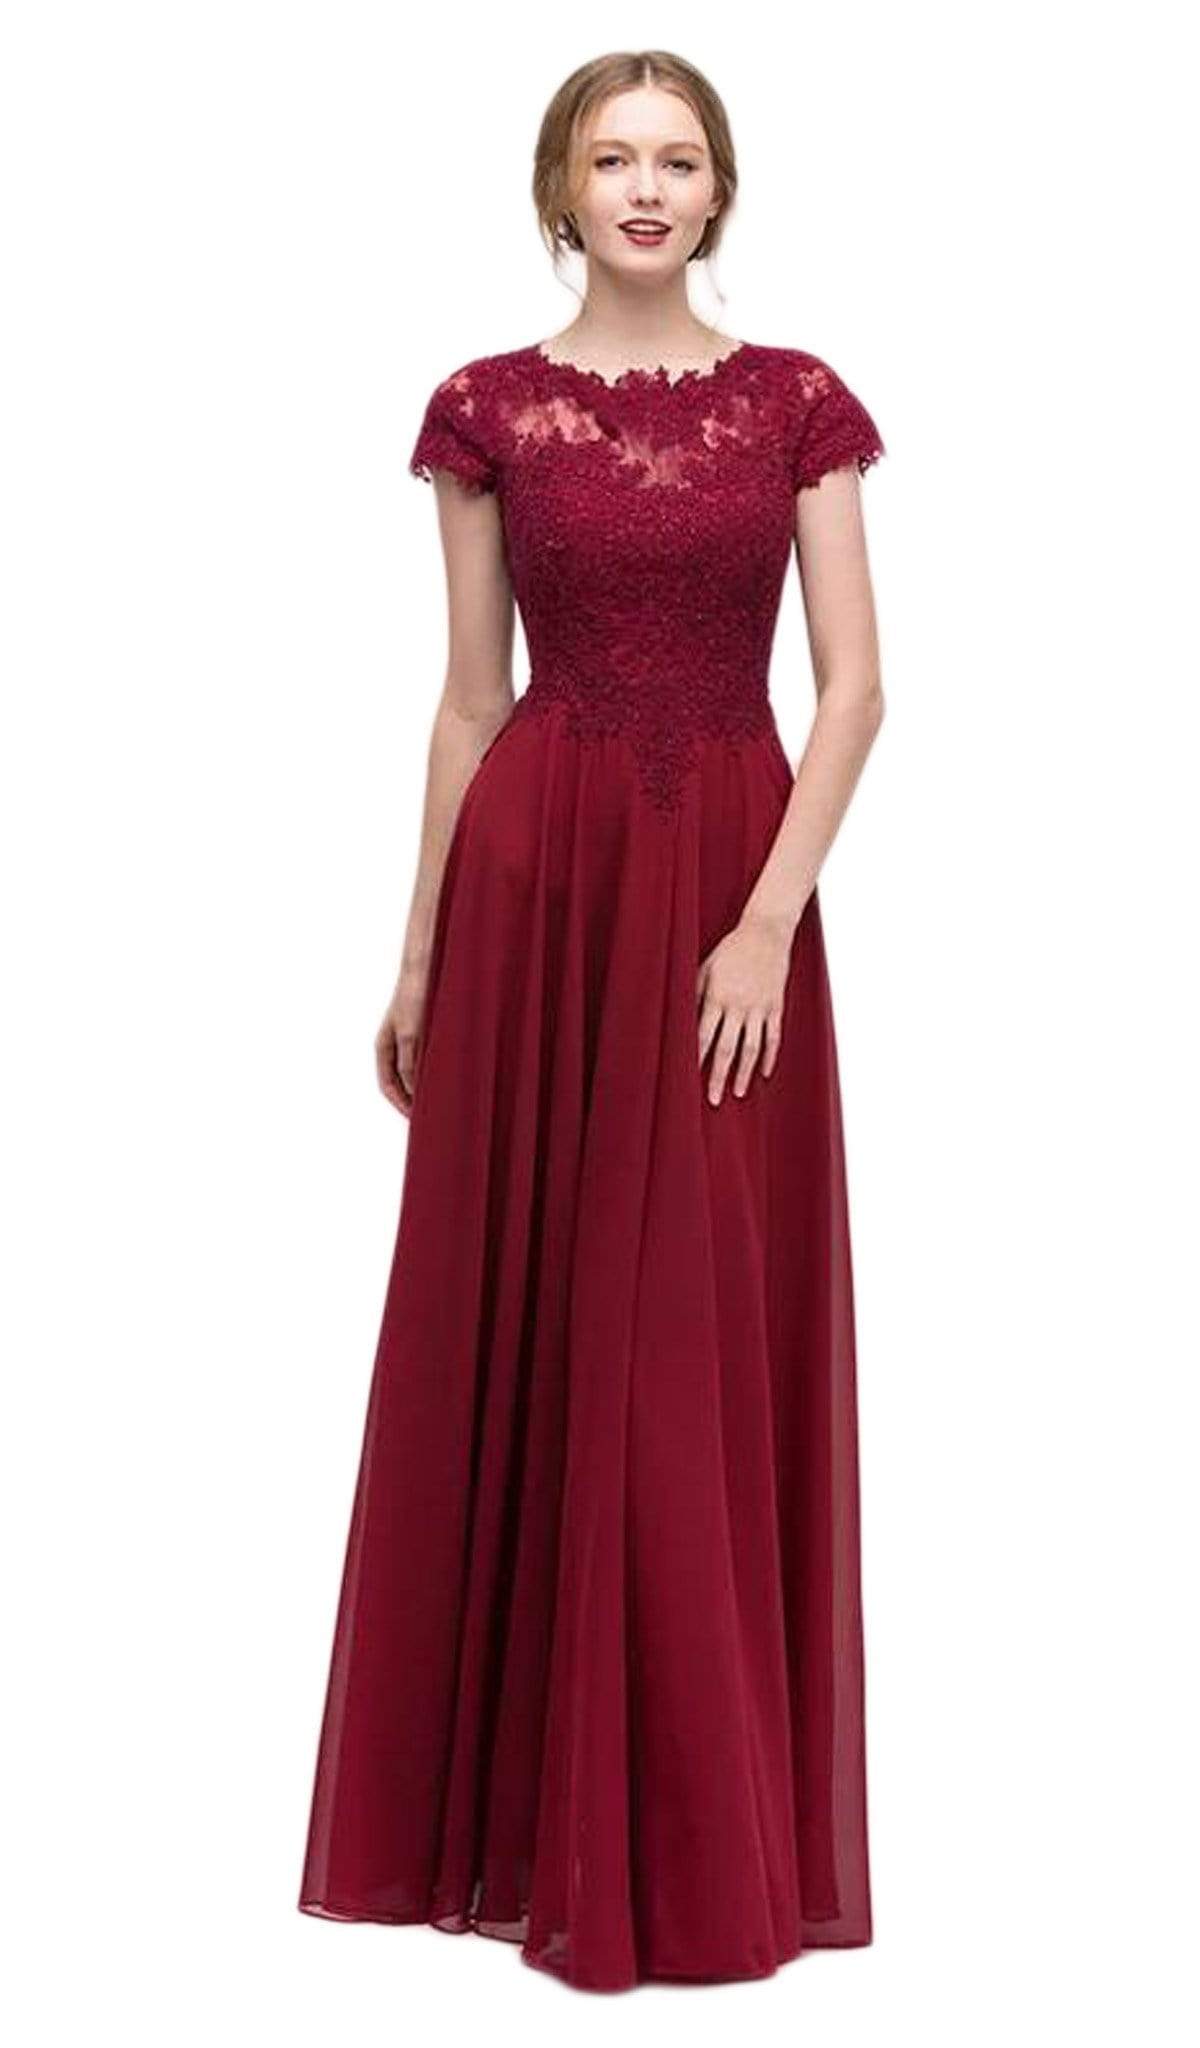 Image of Eureka Fashion - 4909-4XL Illusion Short Sleeve Applique Chiffon Dress